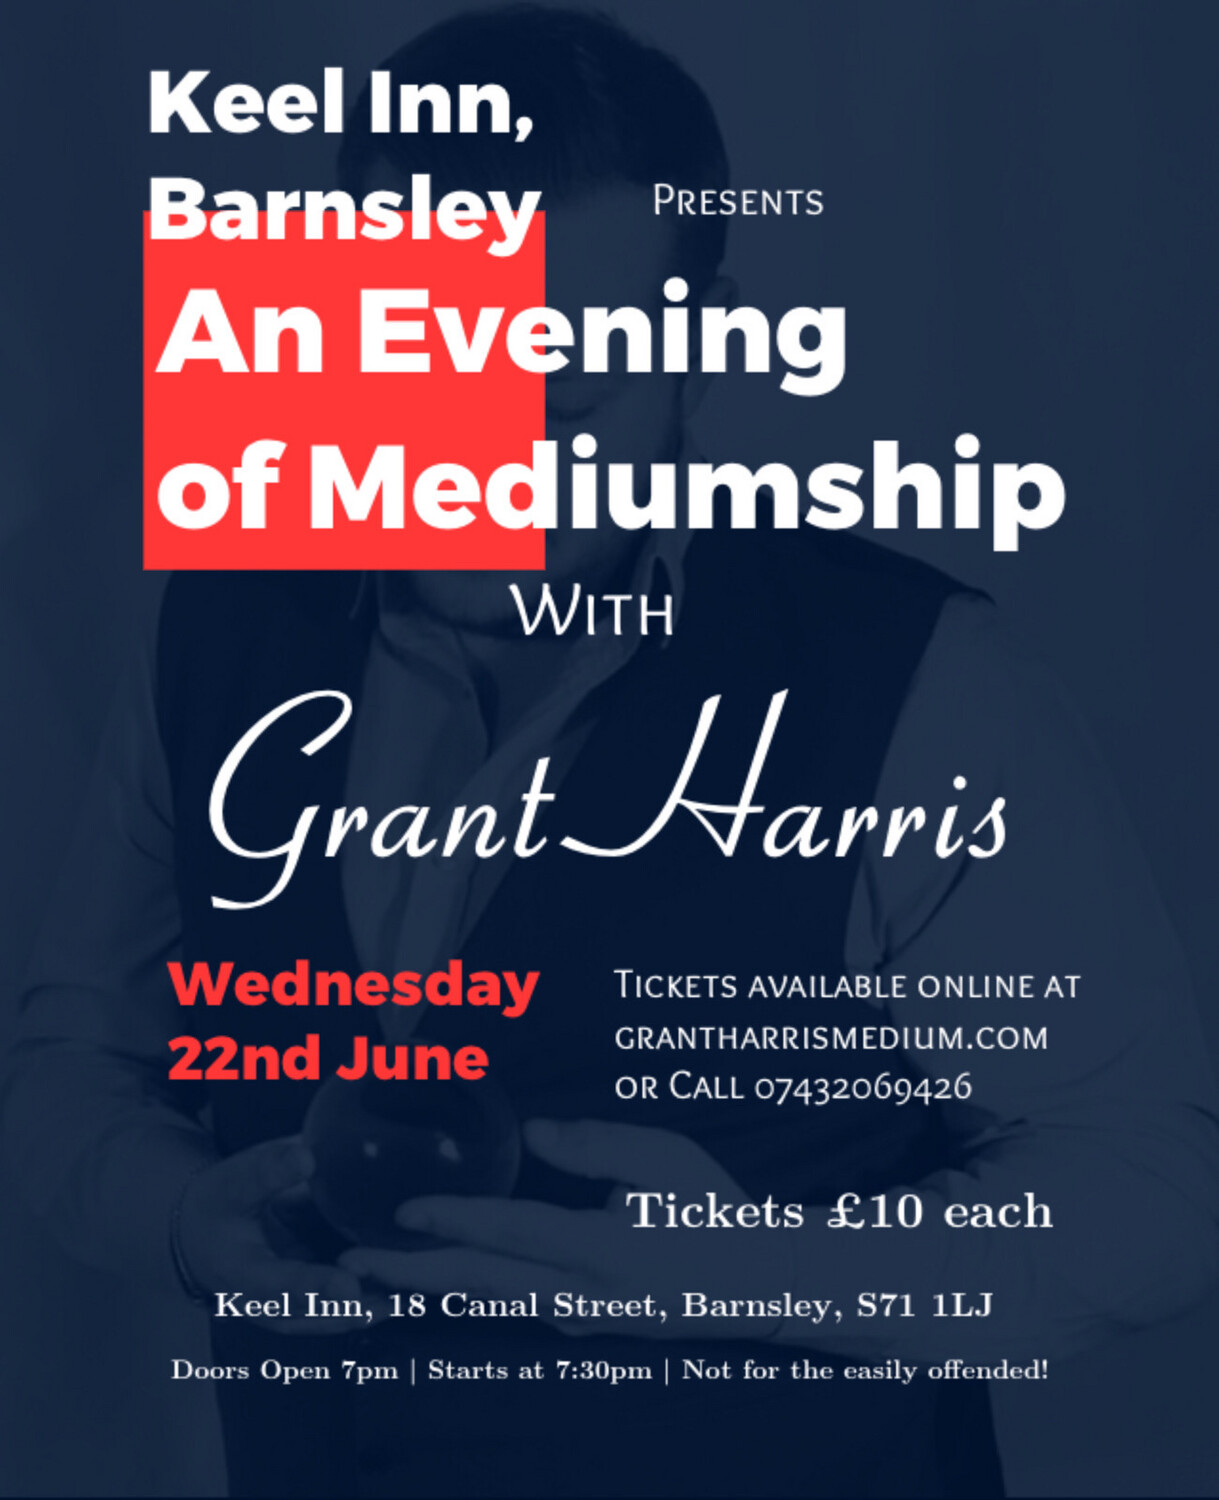 Evening of Mediumship, Keel Inn, Barnsley, Wed 22nd June 2022